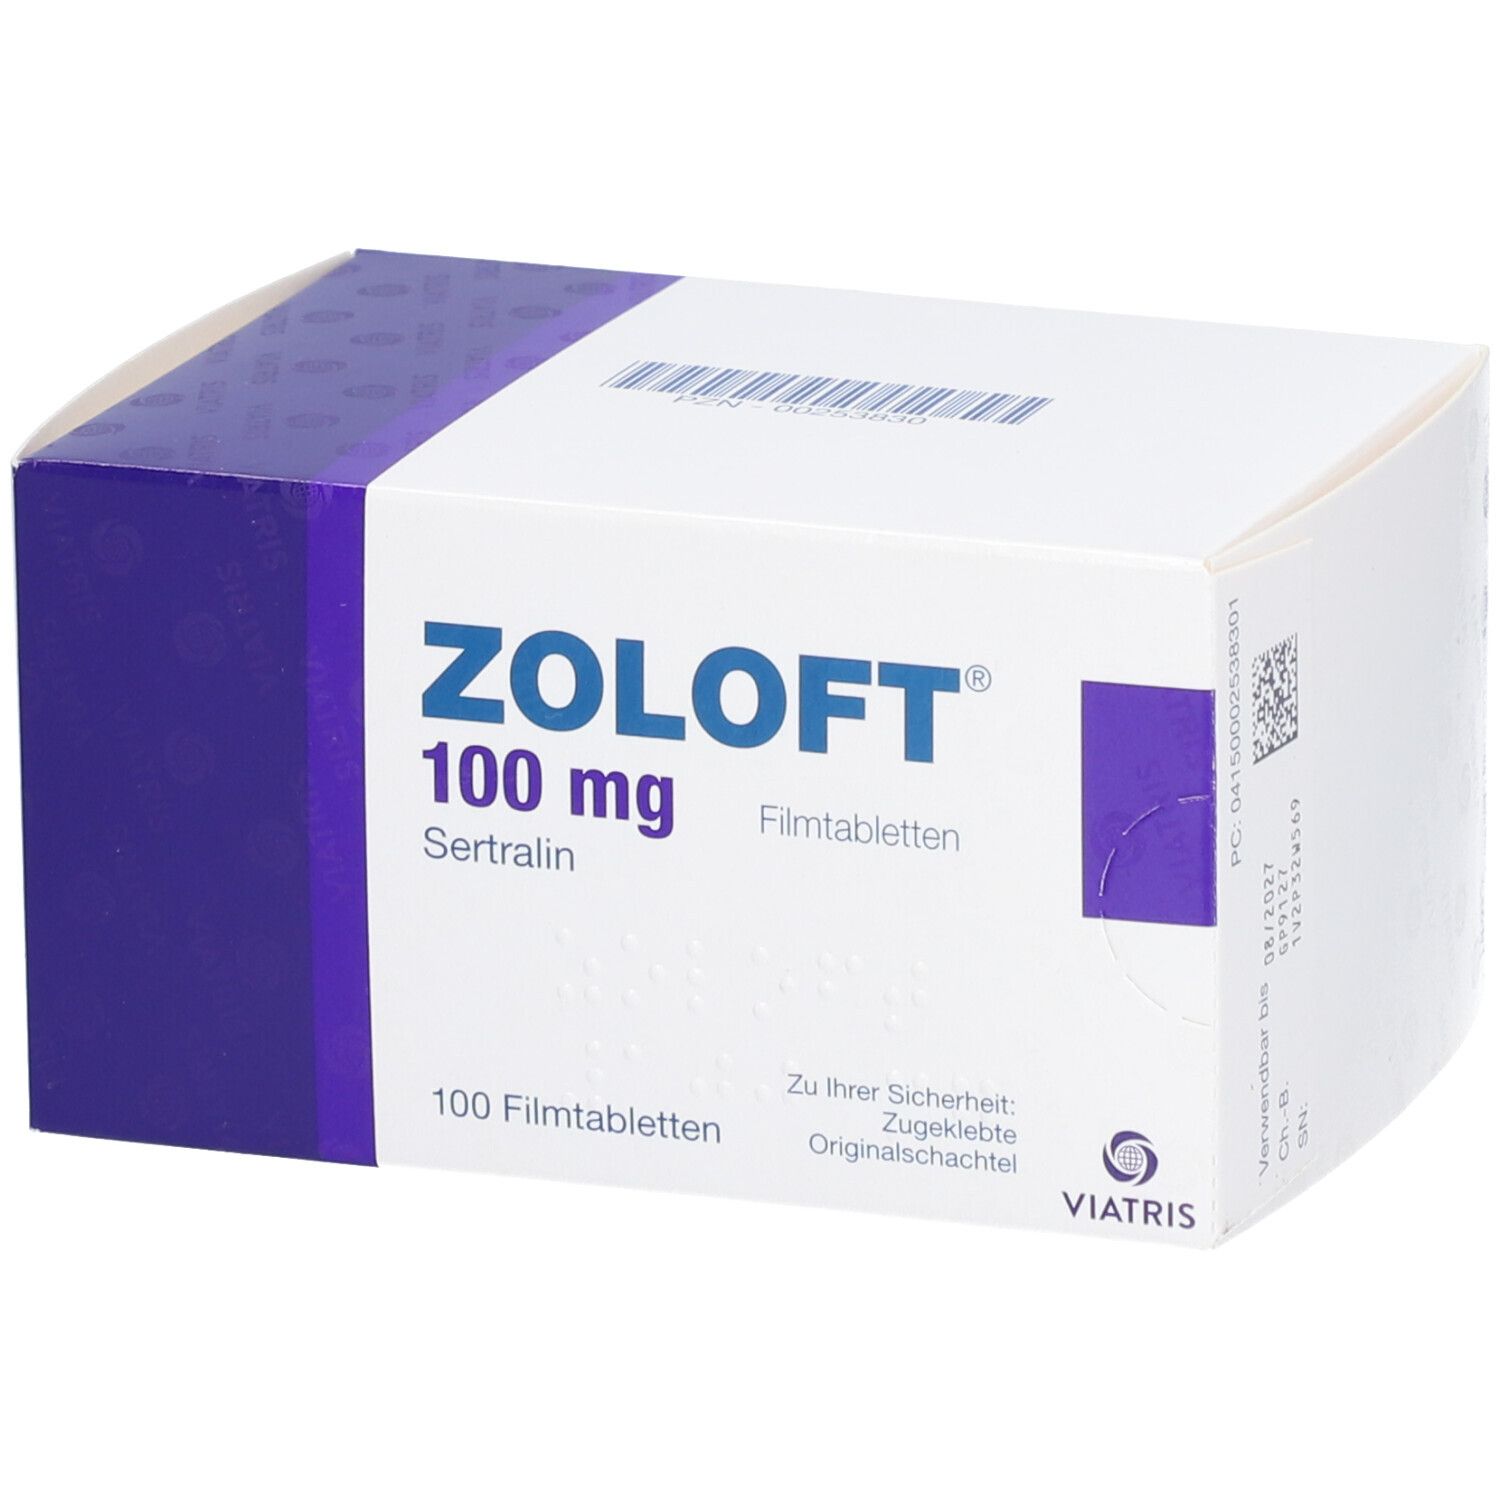 Zoloft® 100 mg